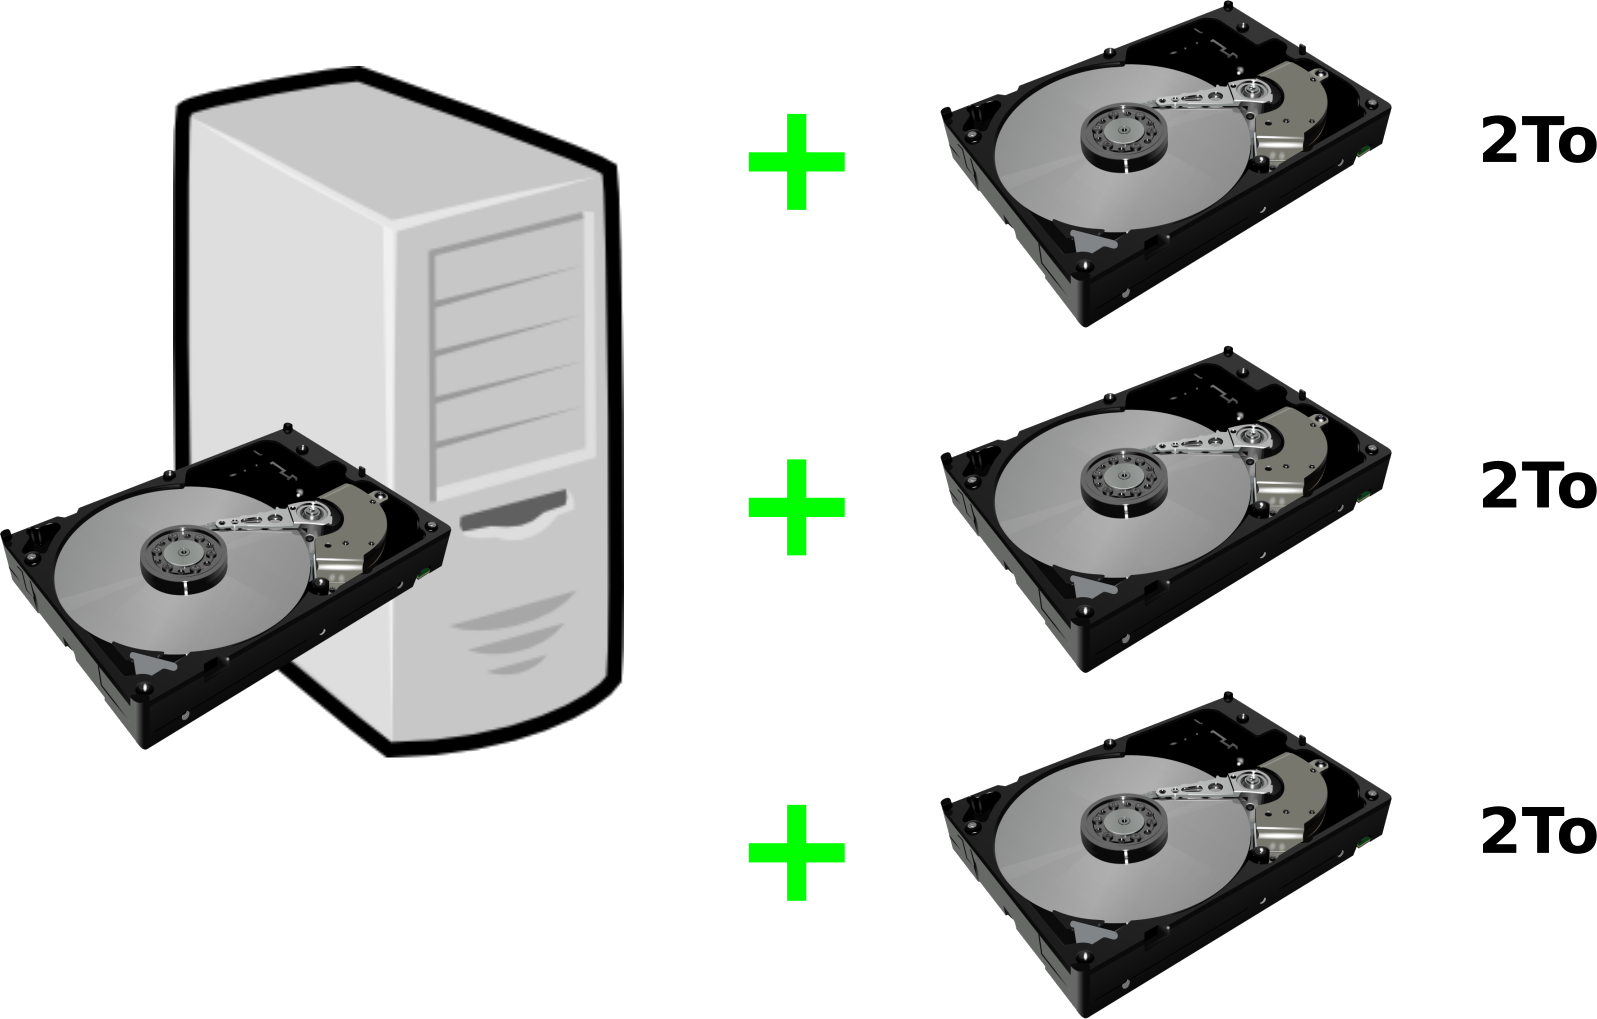 NAS with three 2 TB disks